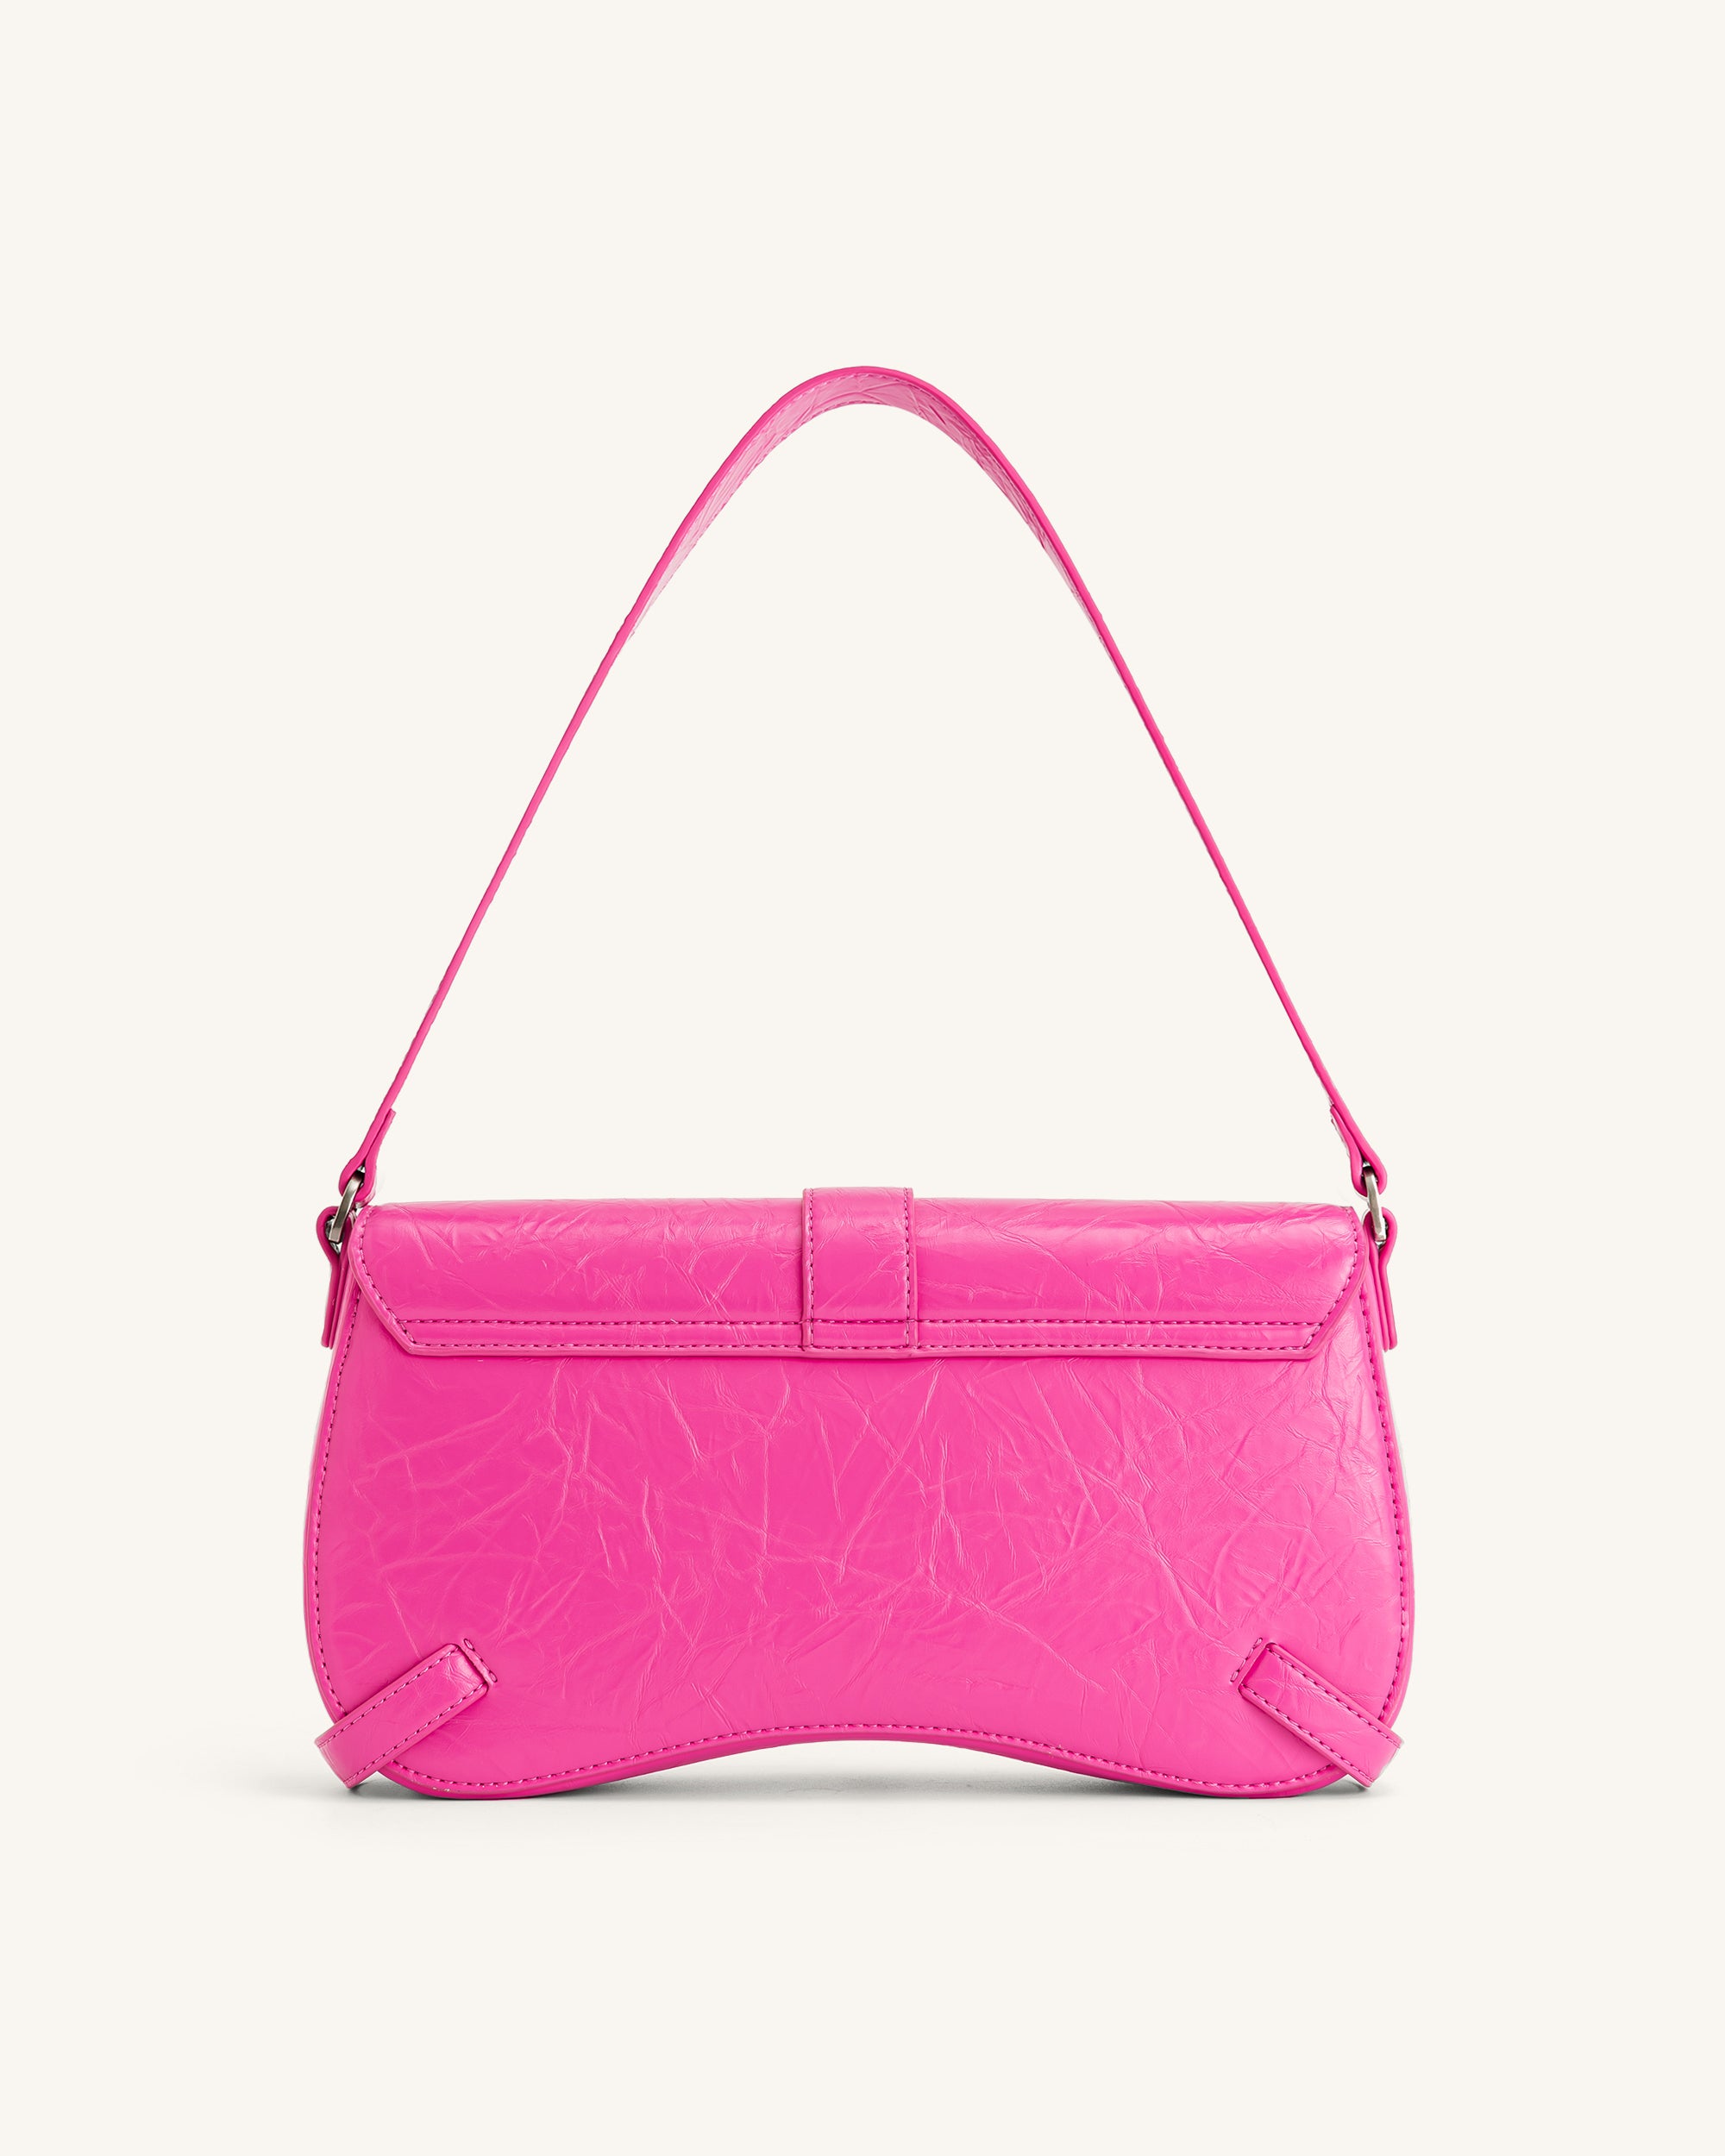 Joy Crushed Shoulder Bag - Bright Pink Online Shopping - JW Pei